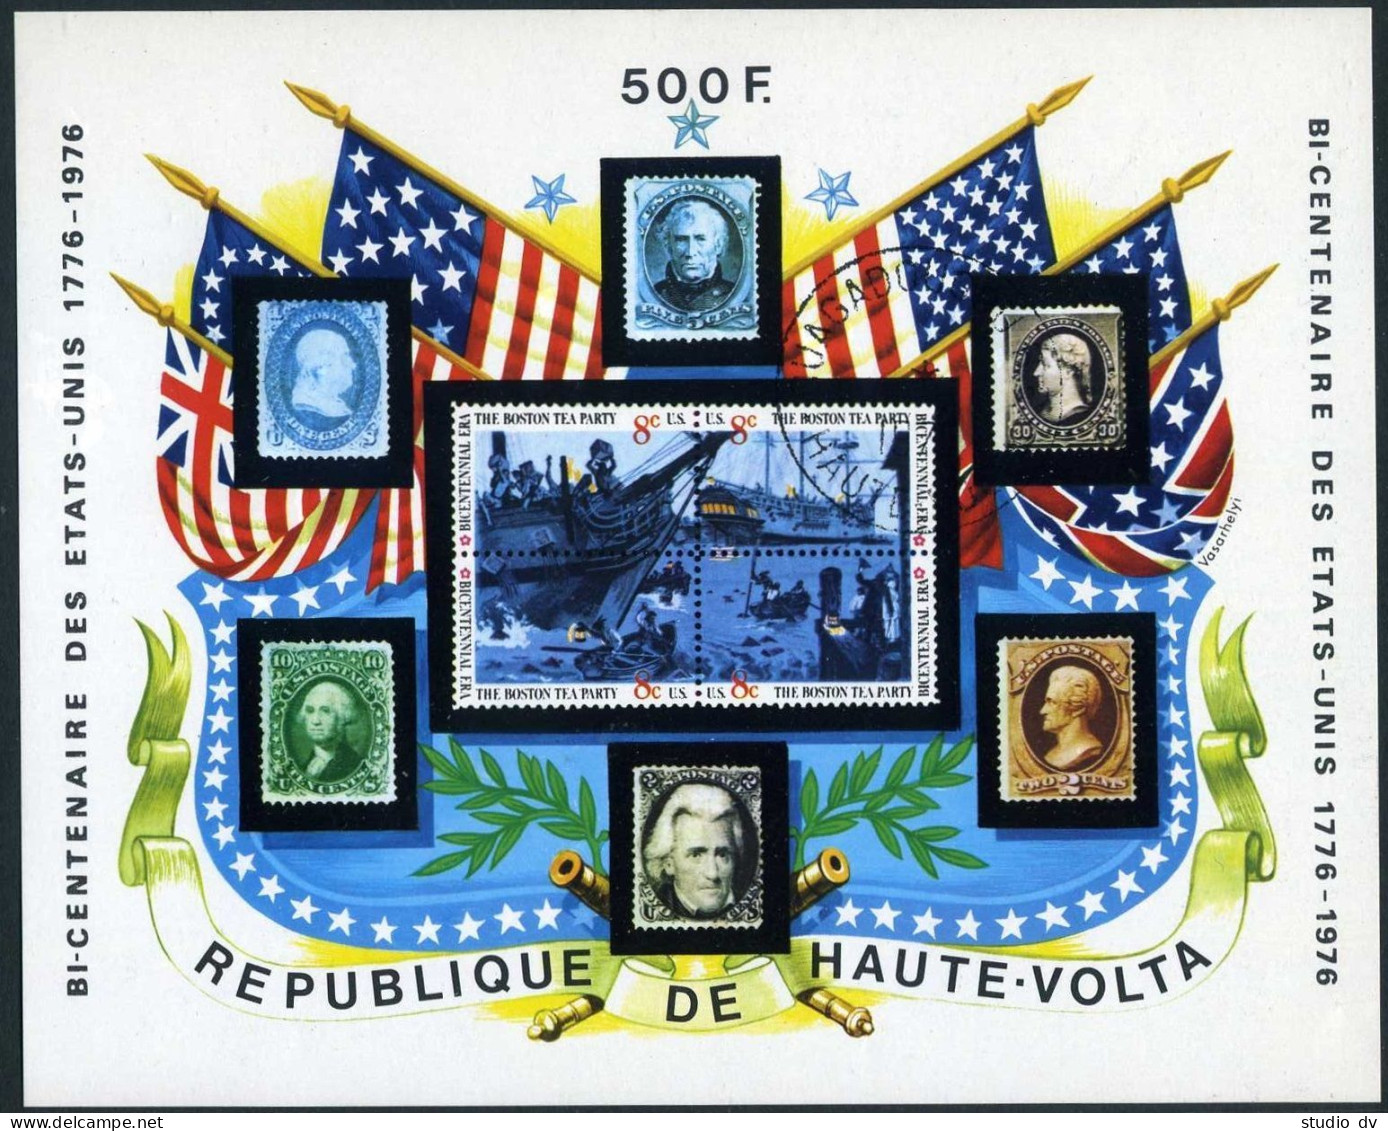 Burkina Faso 358 Sheet, CTO. Michel Bl.28. USA-200. Boston Tea Party. US Stamps. - Burkina Faso (1984-...)